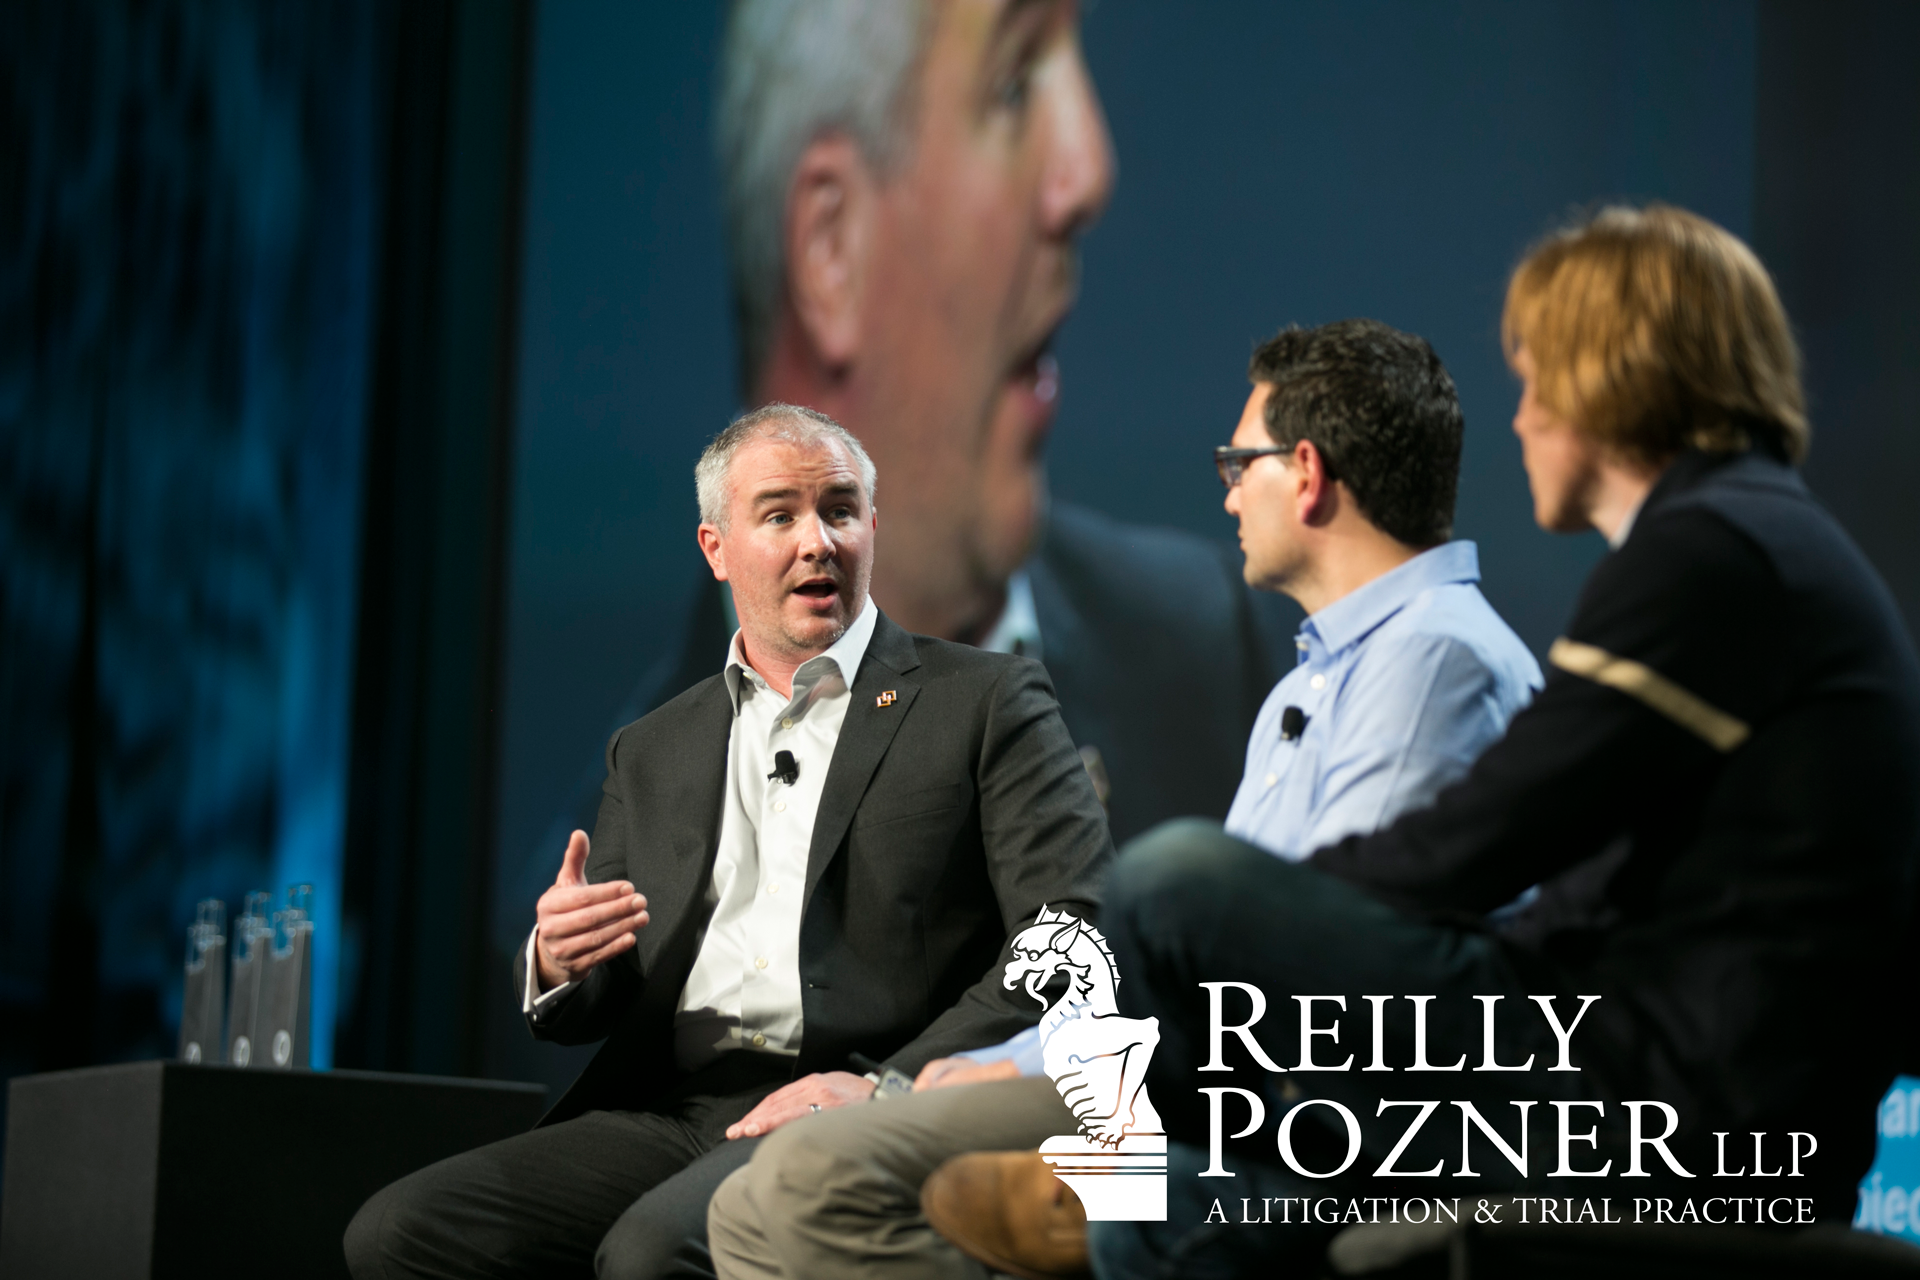 Innovation Awards - Reilly Pozner
Damages Calculator